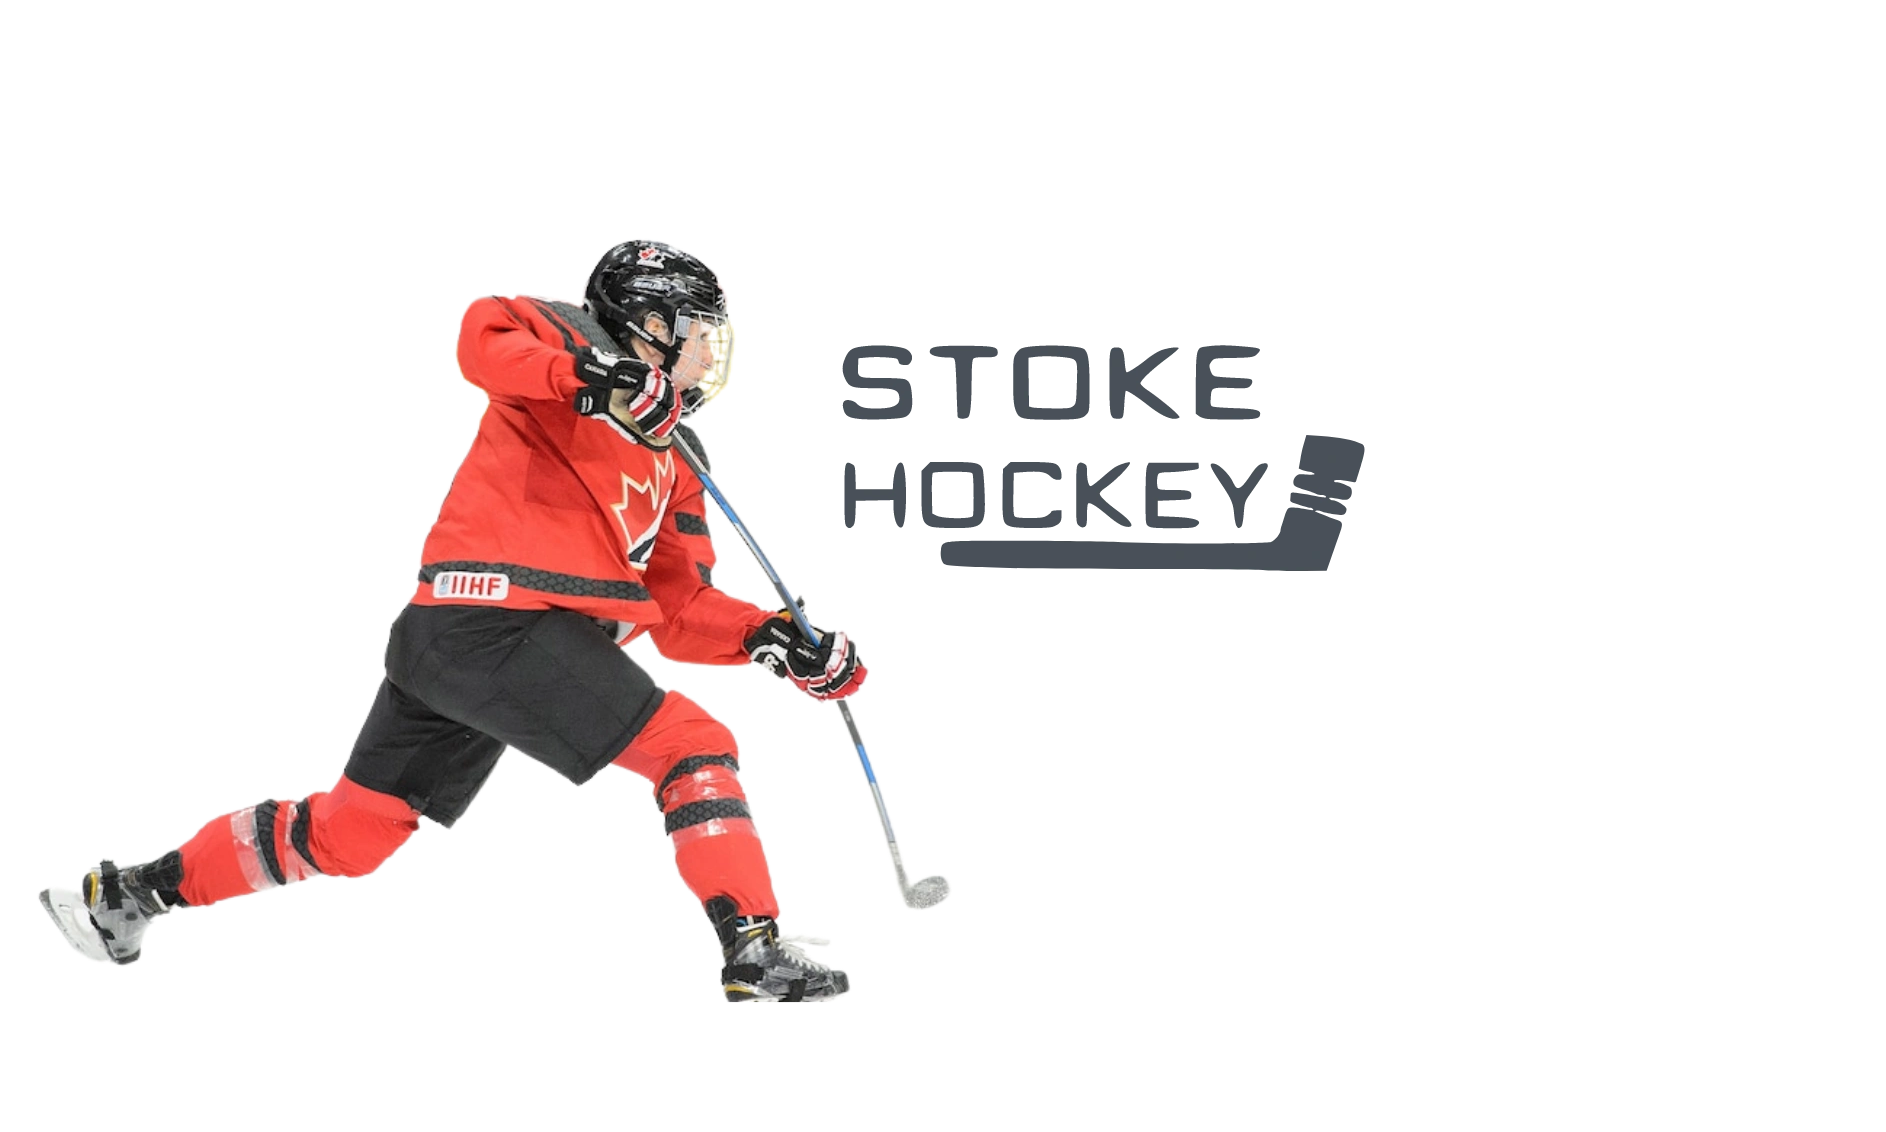 Jocelyne Larocque, Olympic Hockey Player shooting a puck. Stoke hockey logo